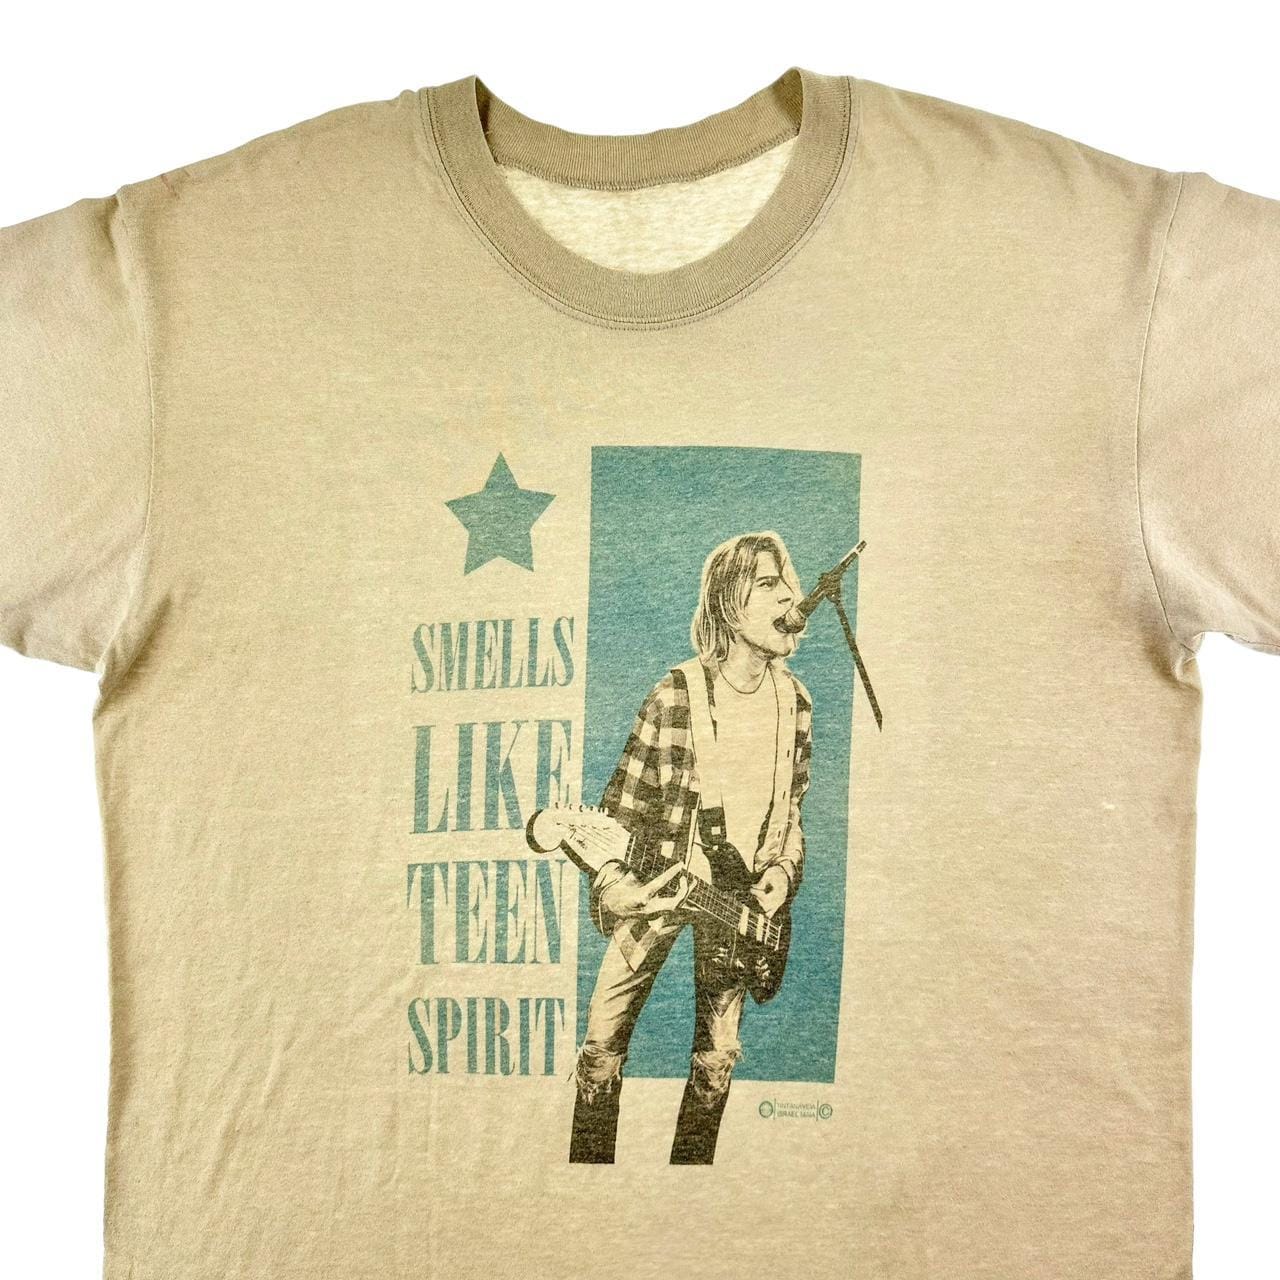 Vintage 90s Nirvana smells like teen spirit t shirt size M